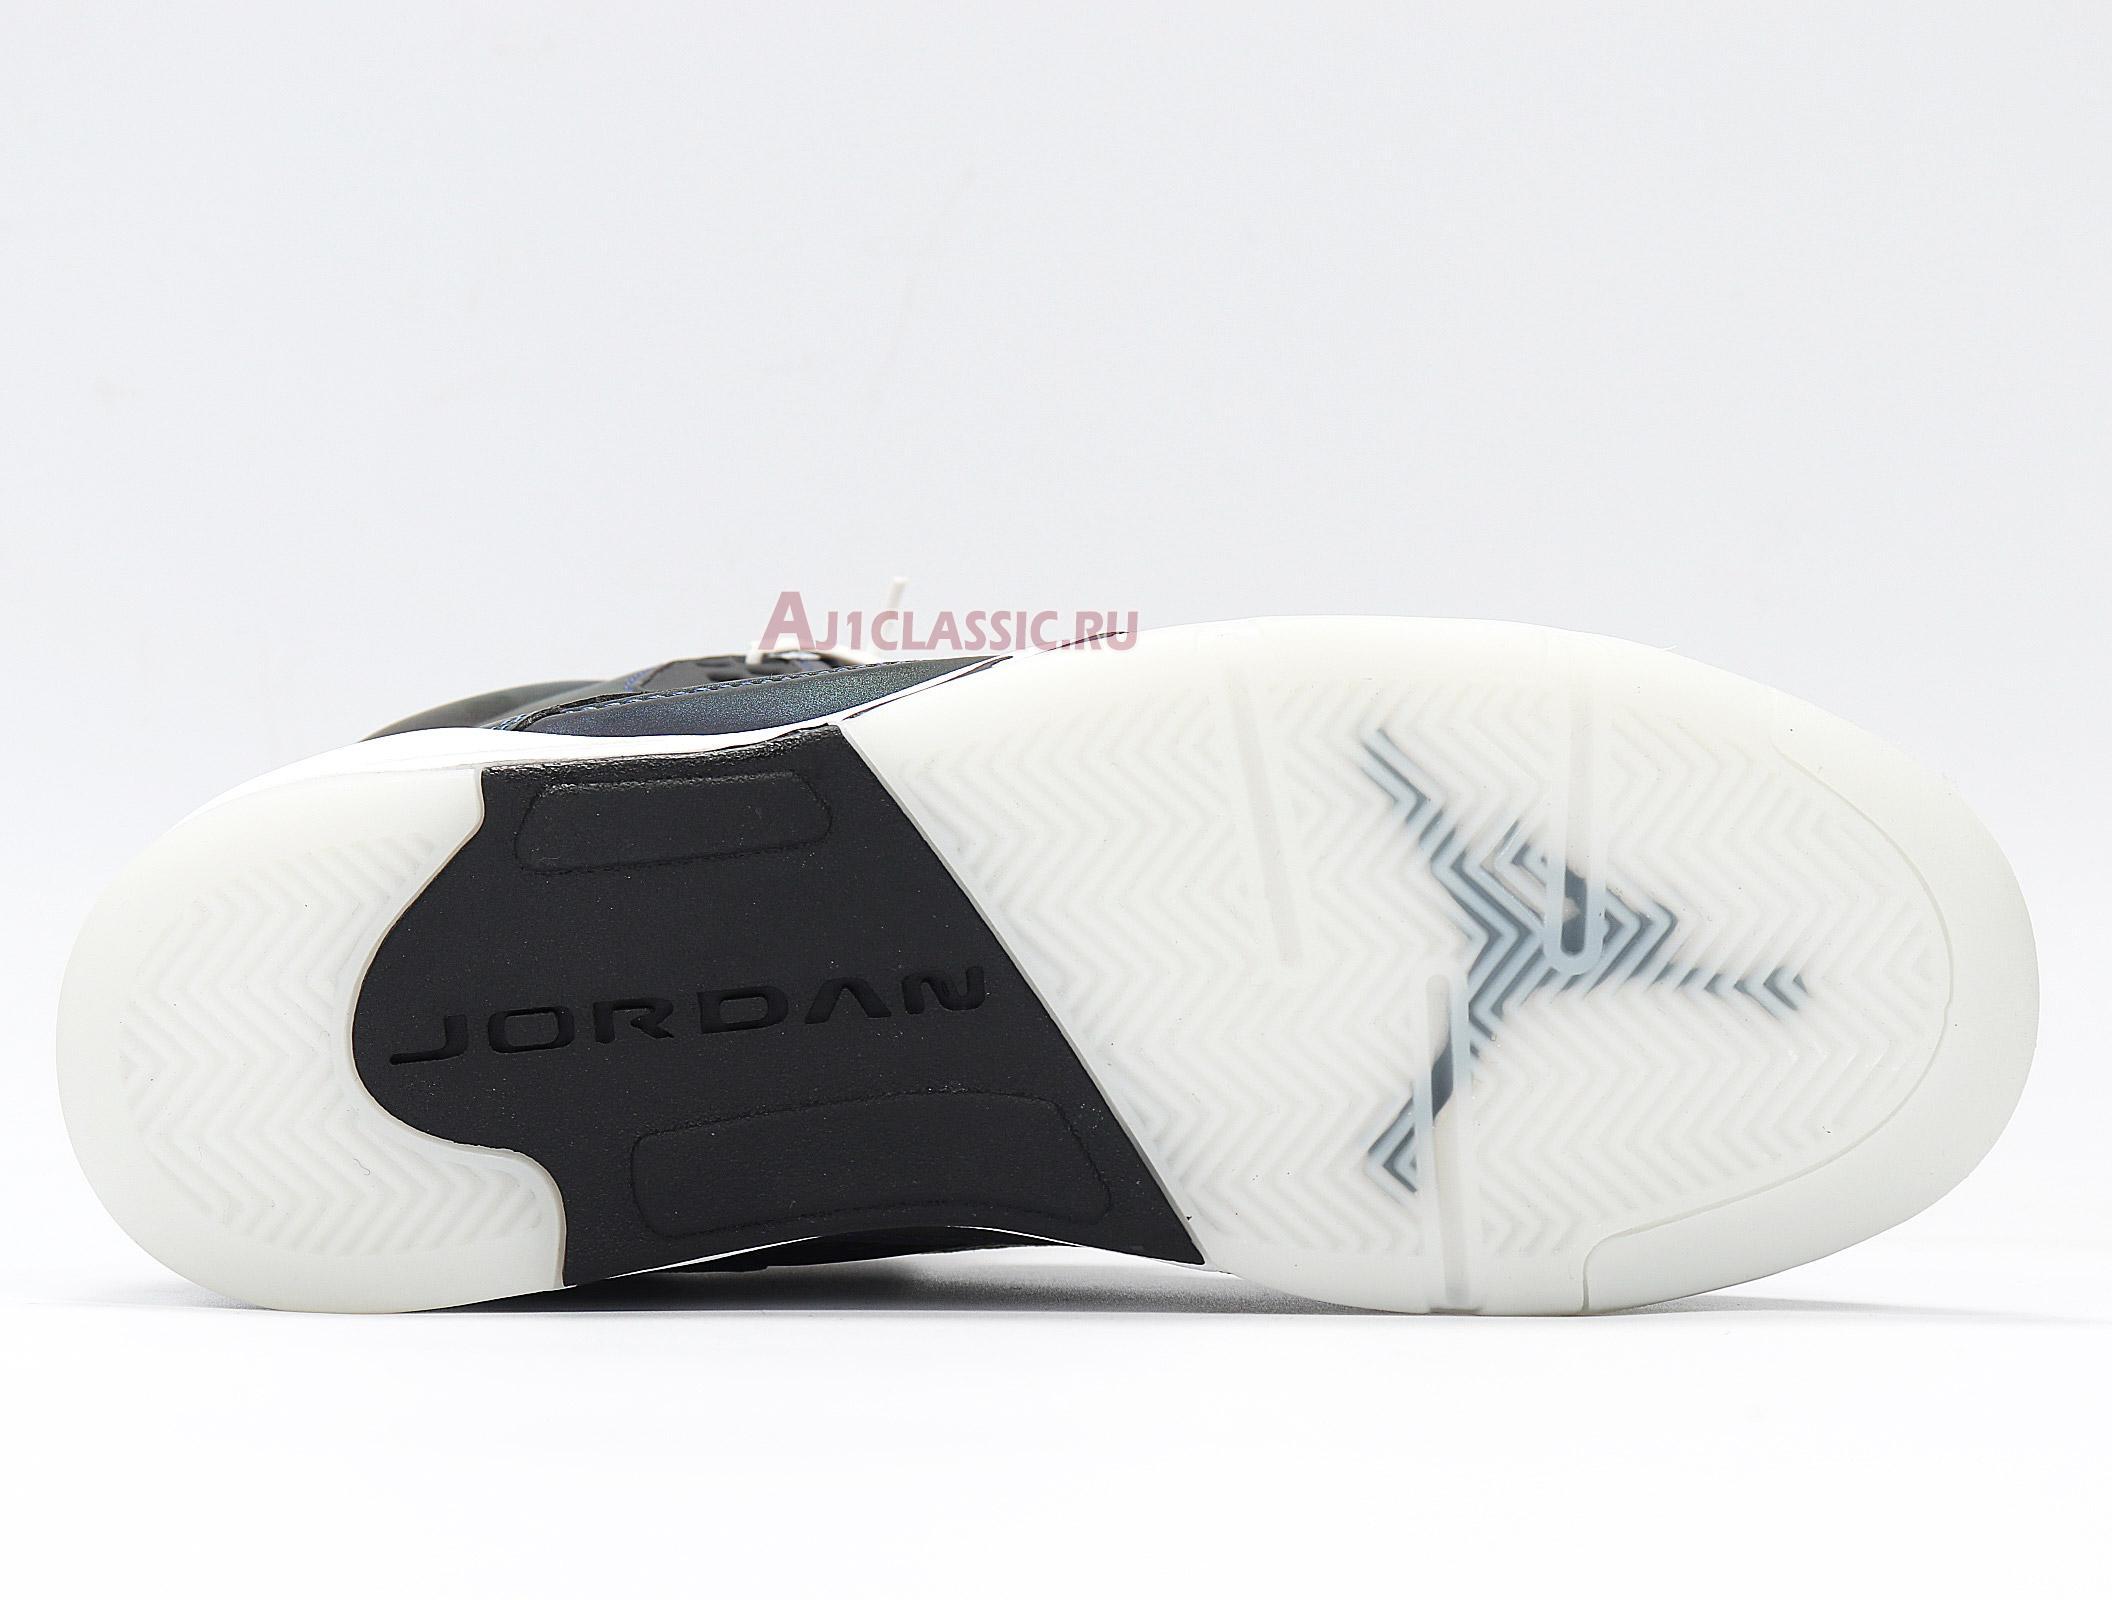 Air Jordan 5 Retro "Oil Grey" CD2722-001